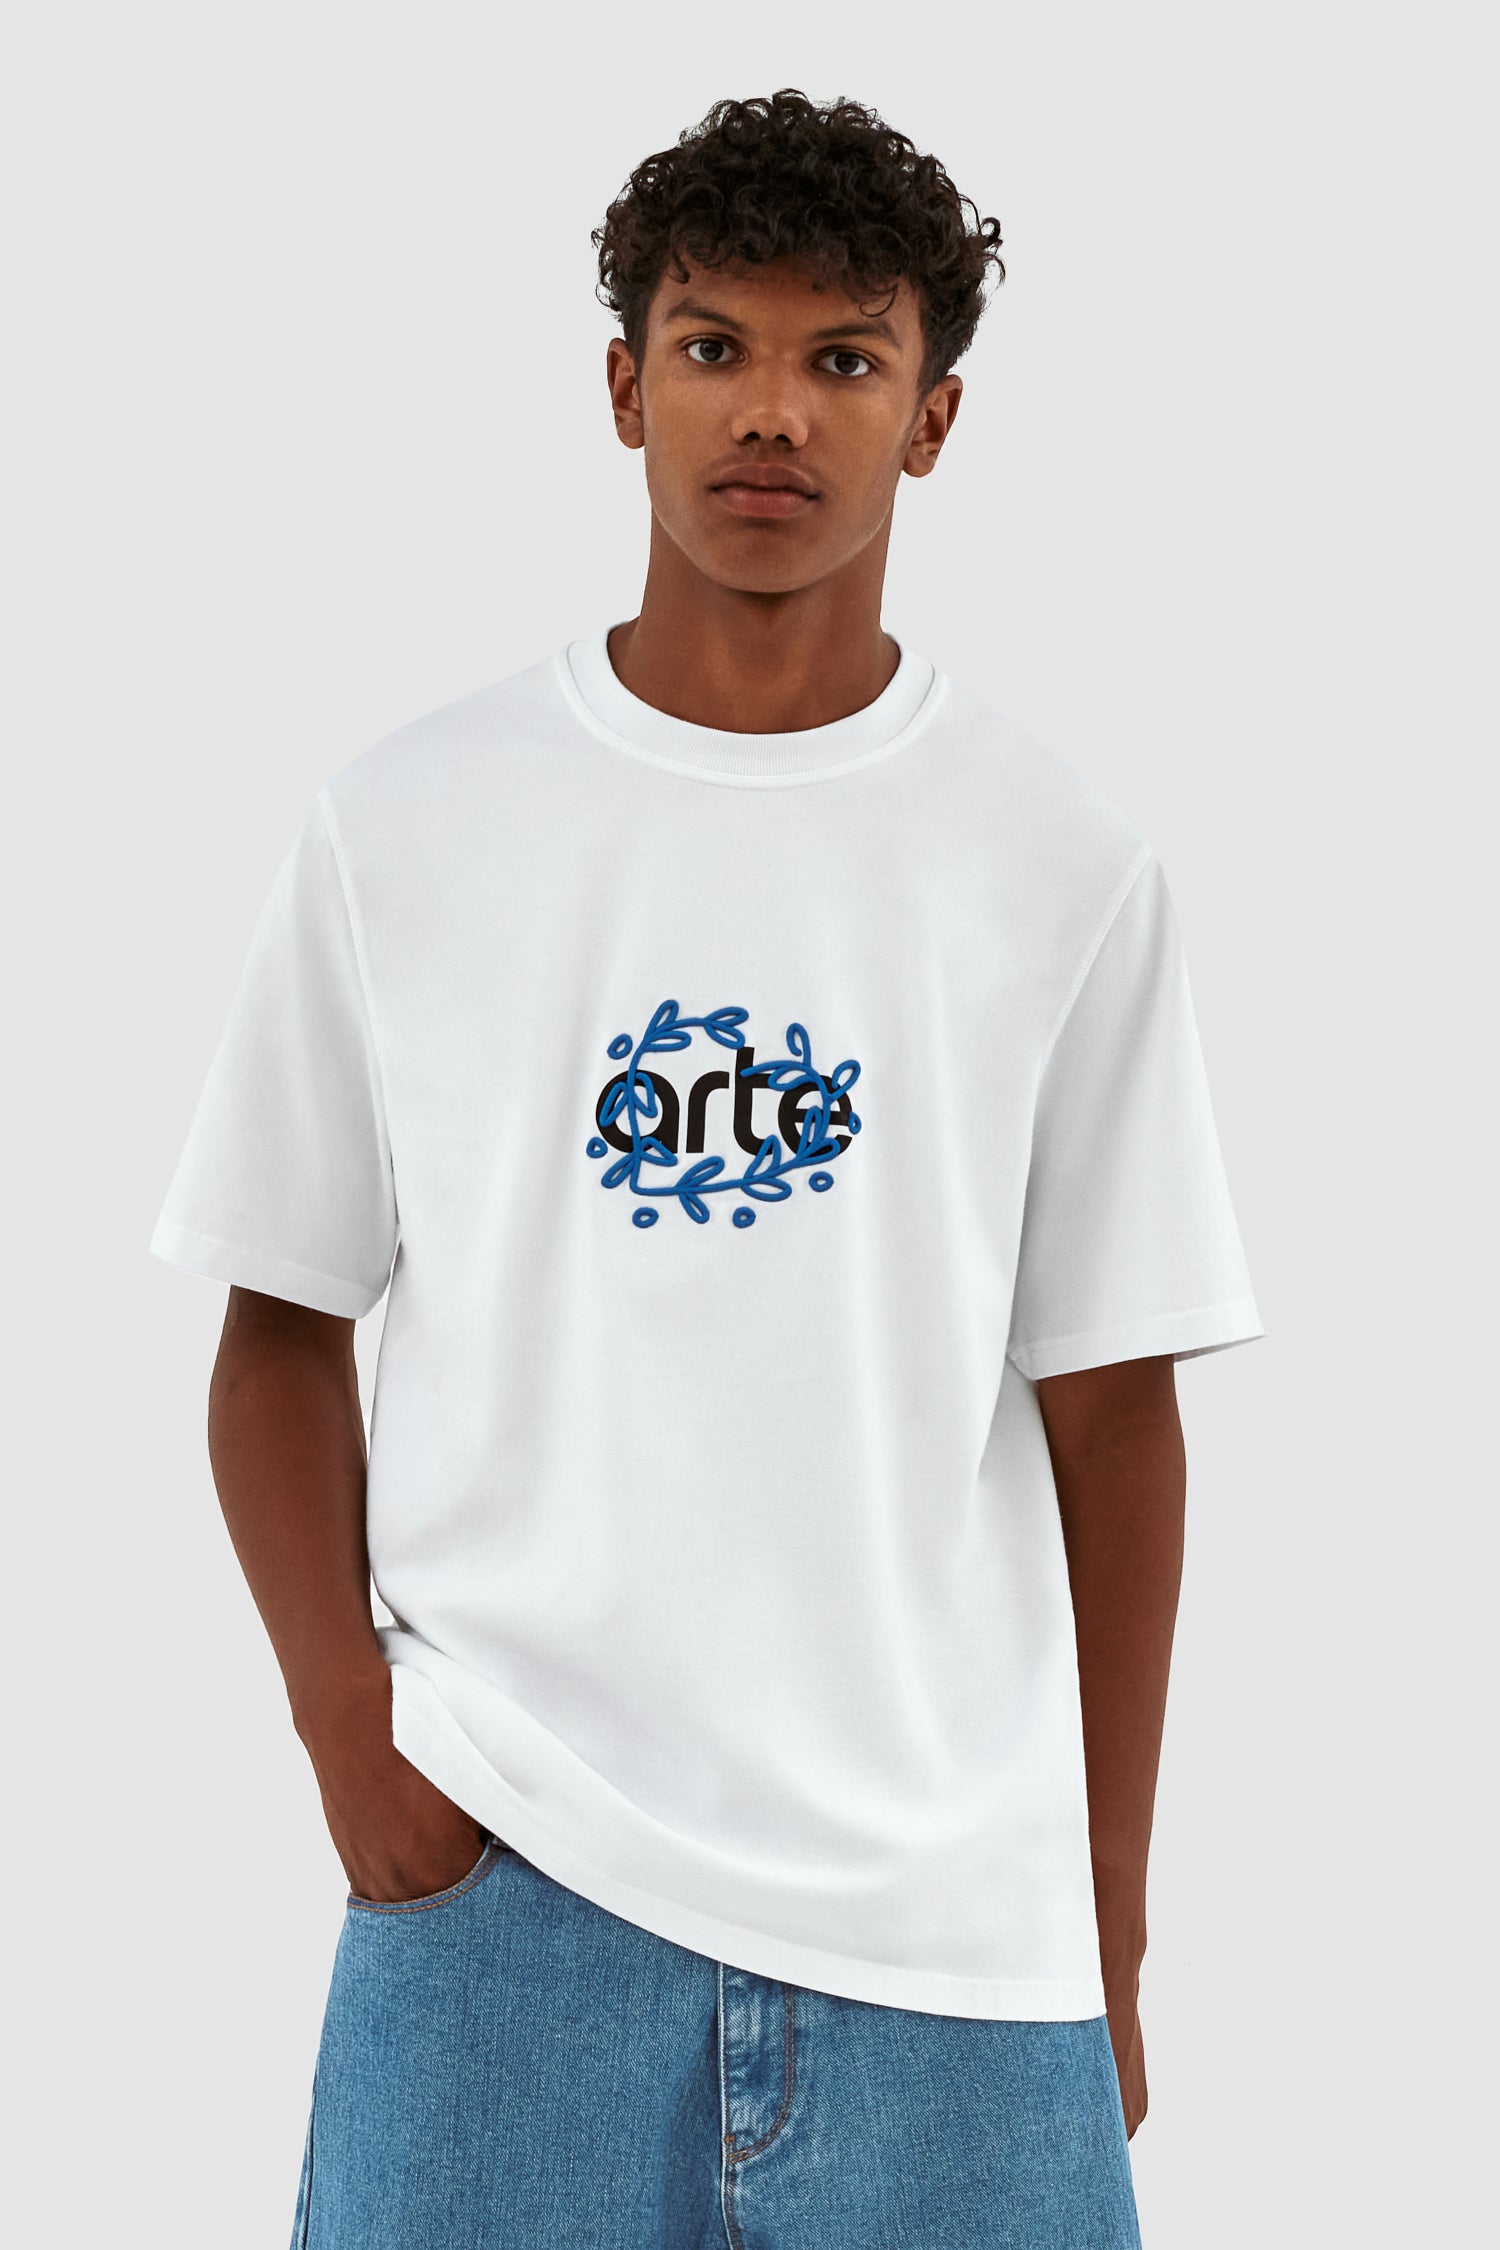 Teo Arte T-shirt frontal - Blanc